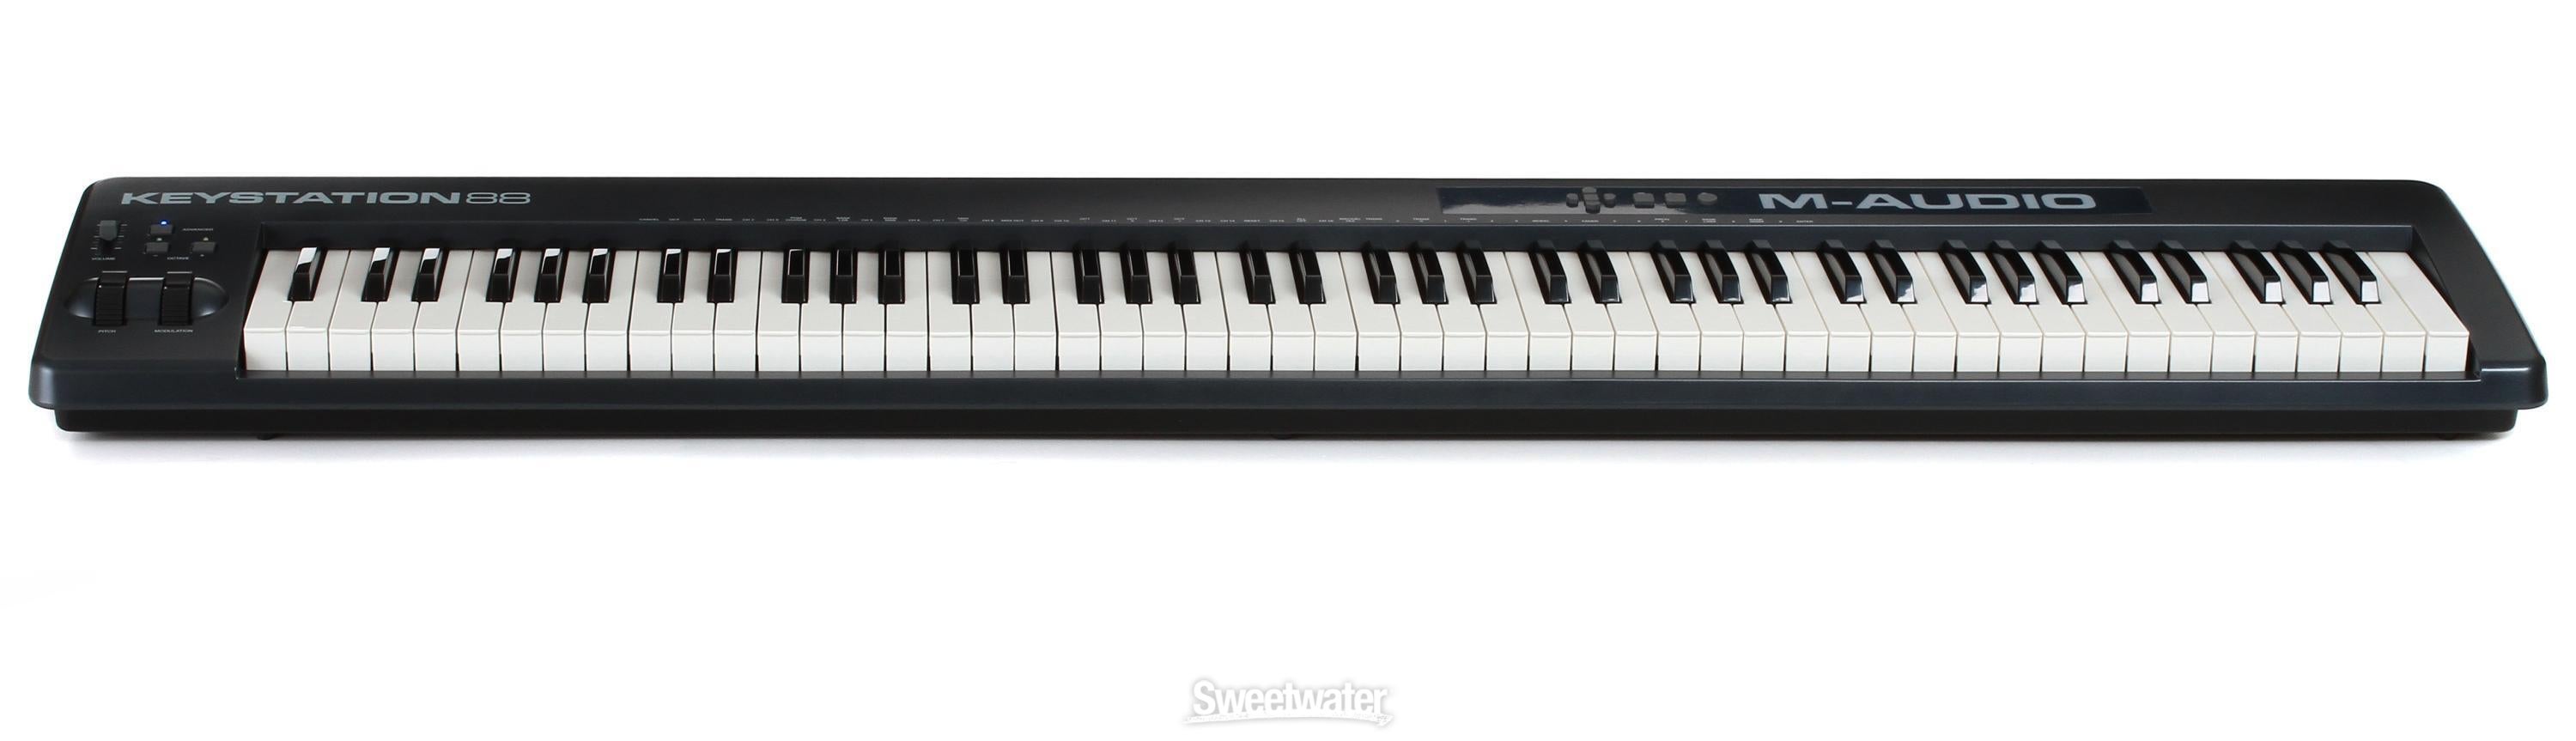 M-Audio Keystation 88 88-key Keyboard Controller Reviews | Sweetwater